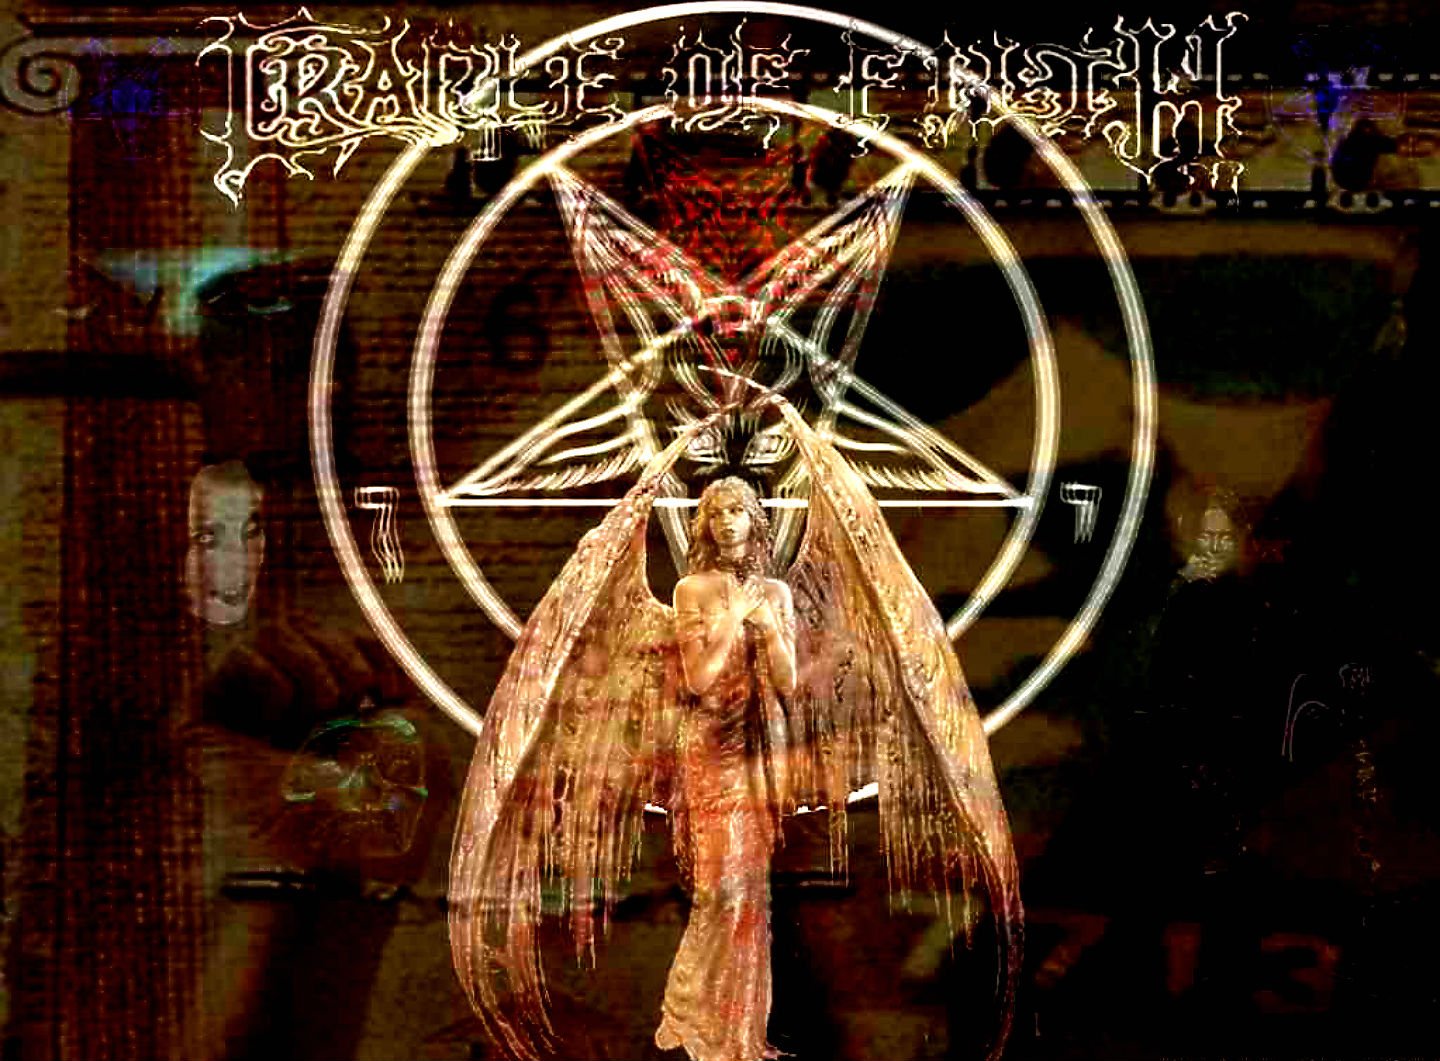 Cradle of filth gothic metal heavy extreme symphonic black dark occult satanic evil wallpaper x